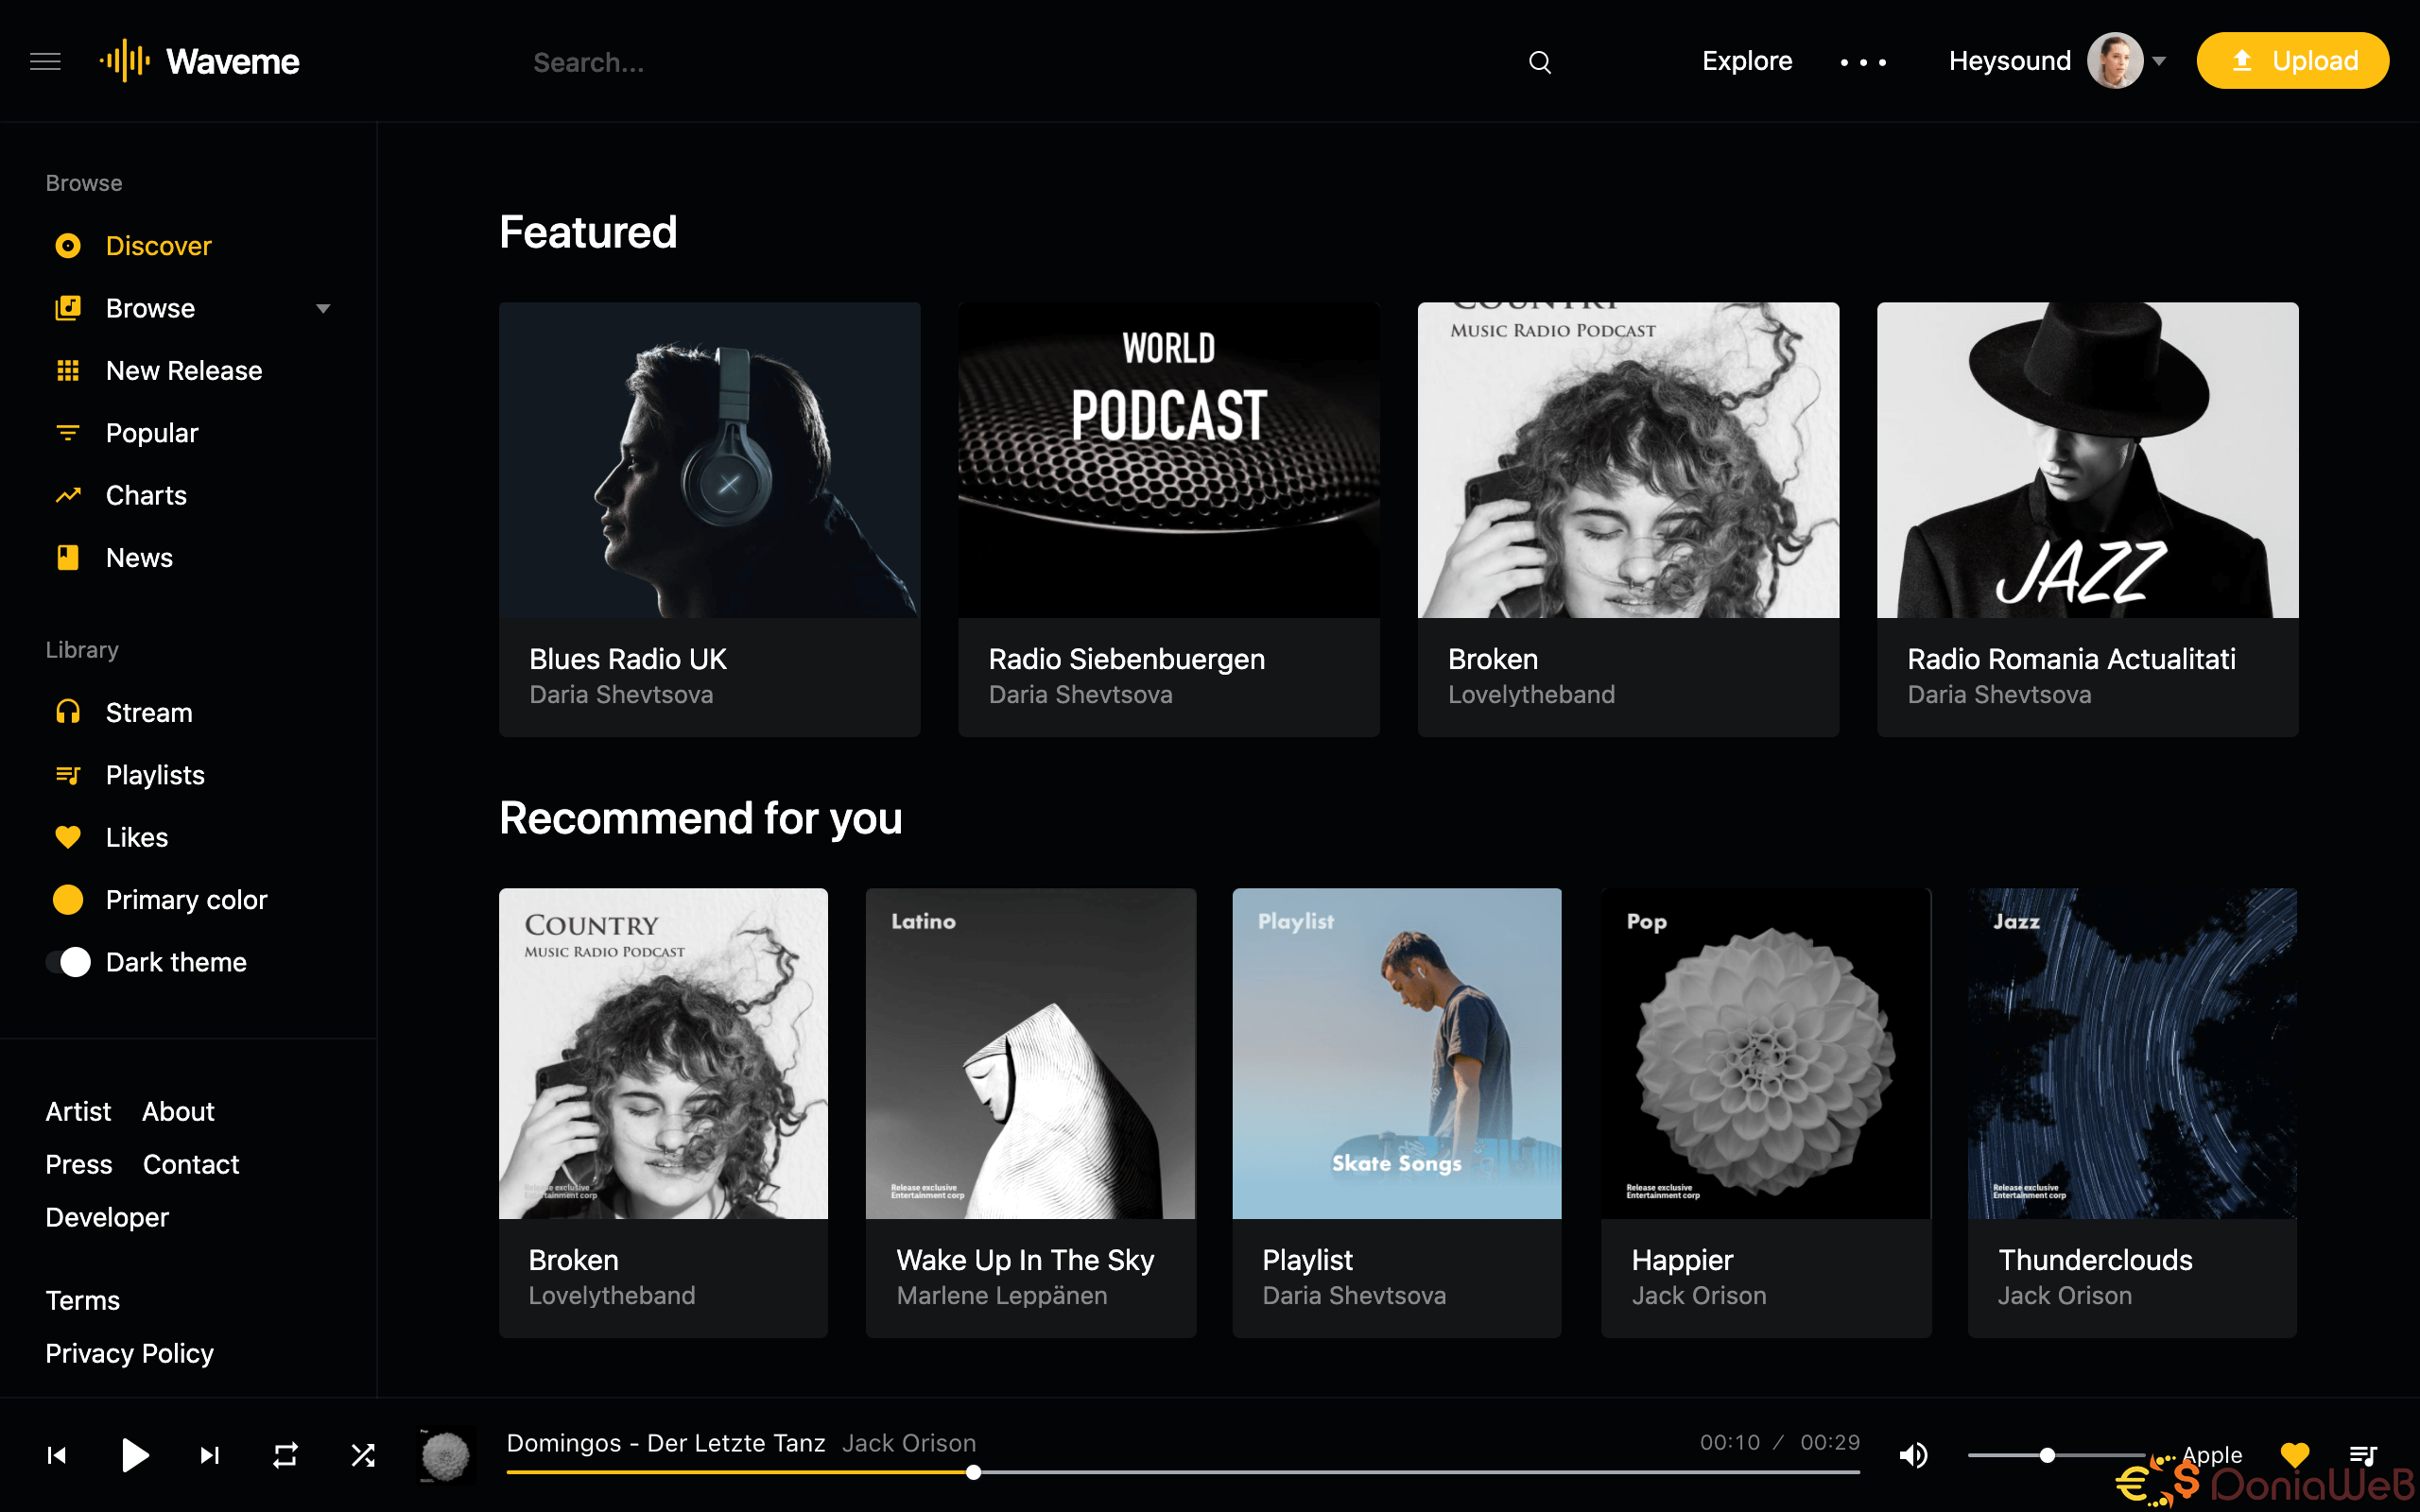 Waveme - Music Platform WordPress Theme